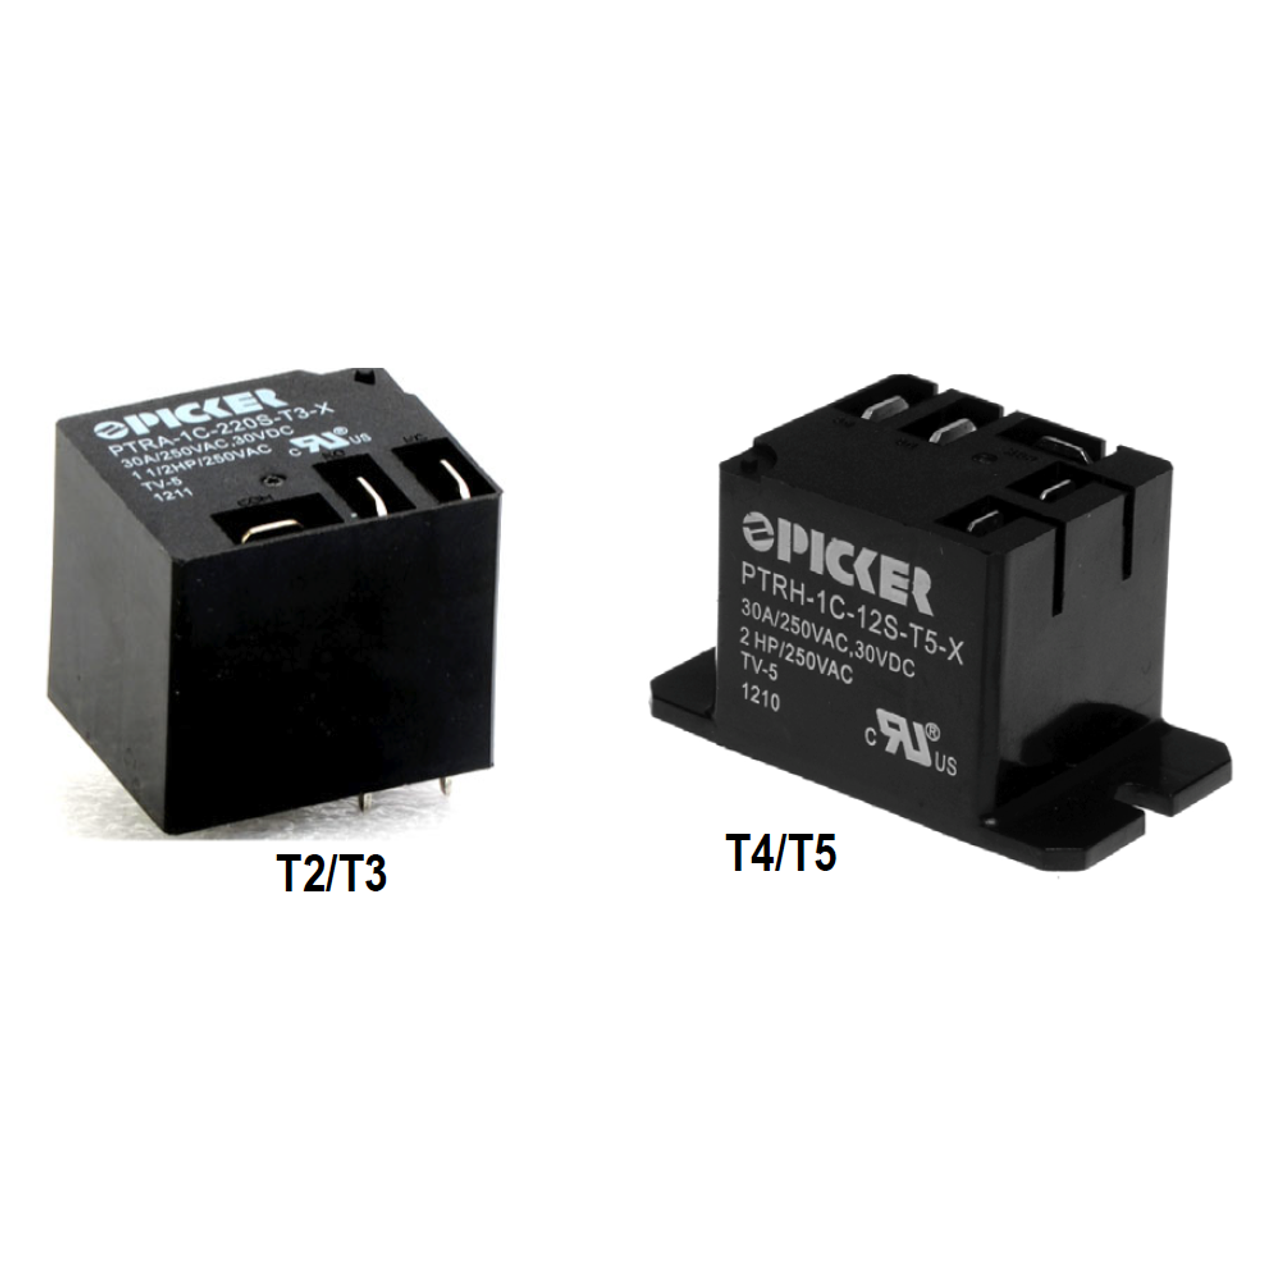 Picker PTRH-1C-110SF-T4-X67G Power Relays